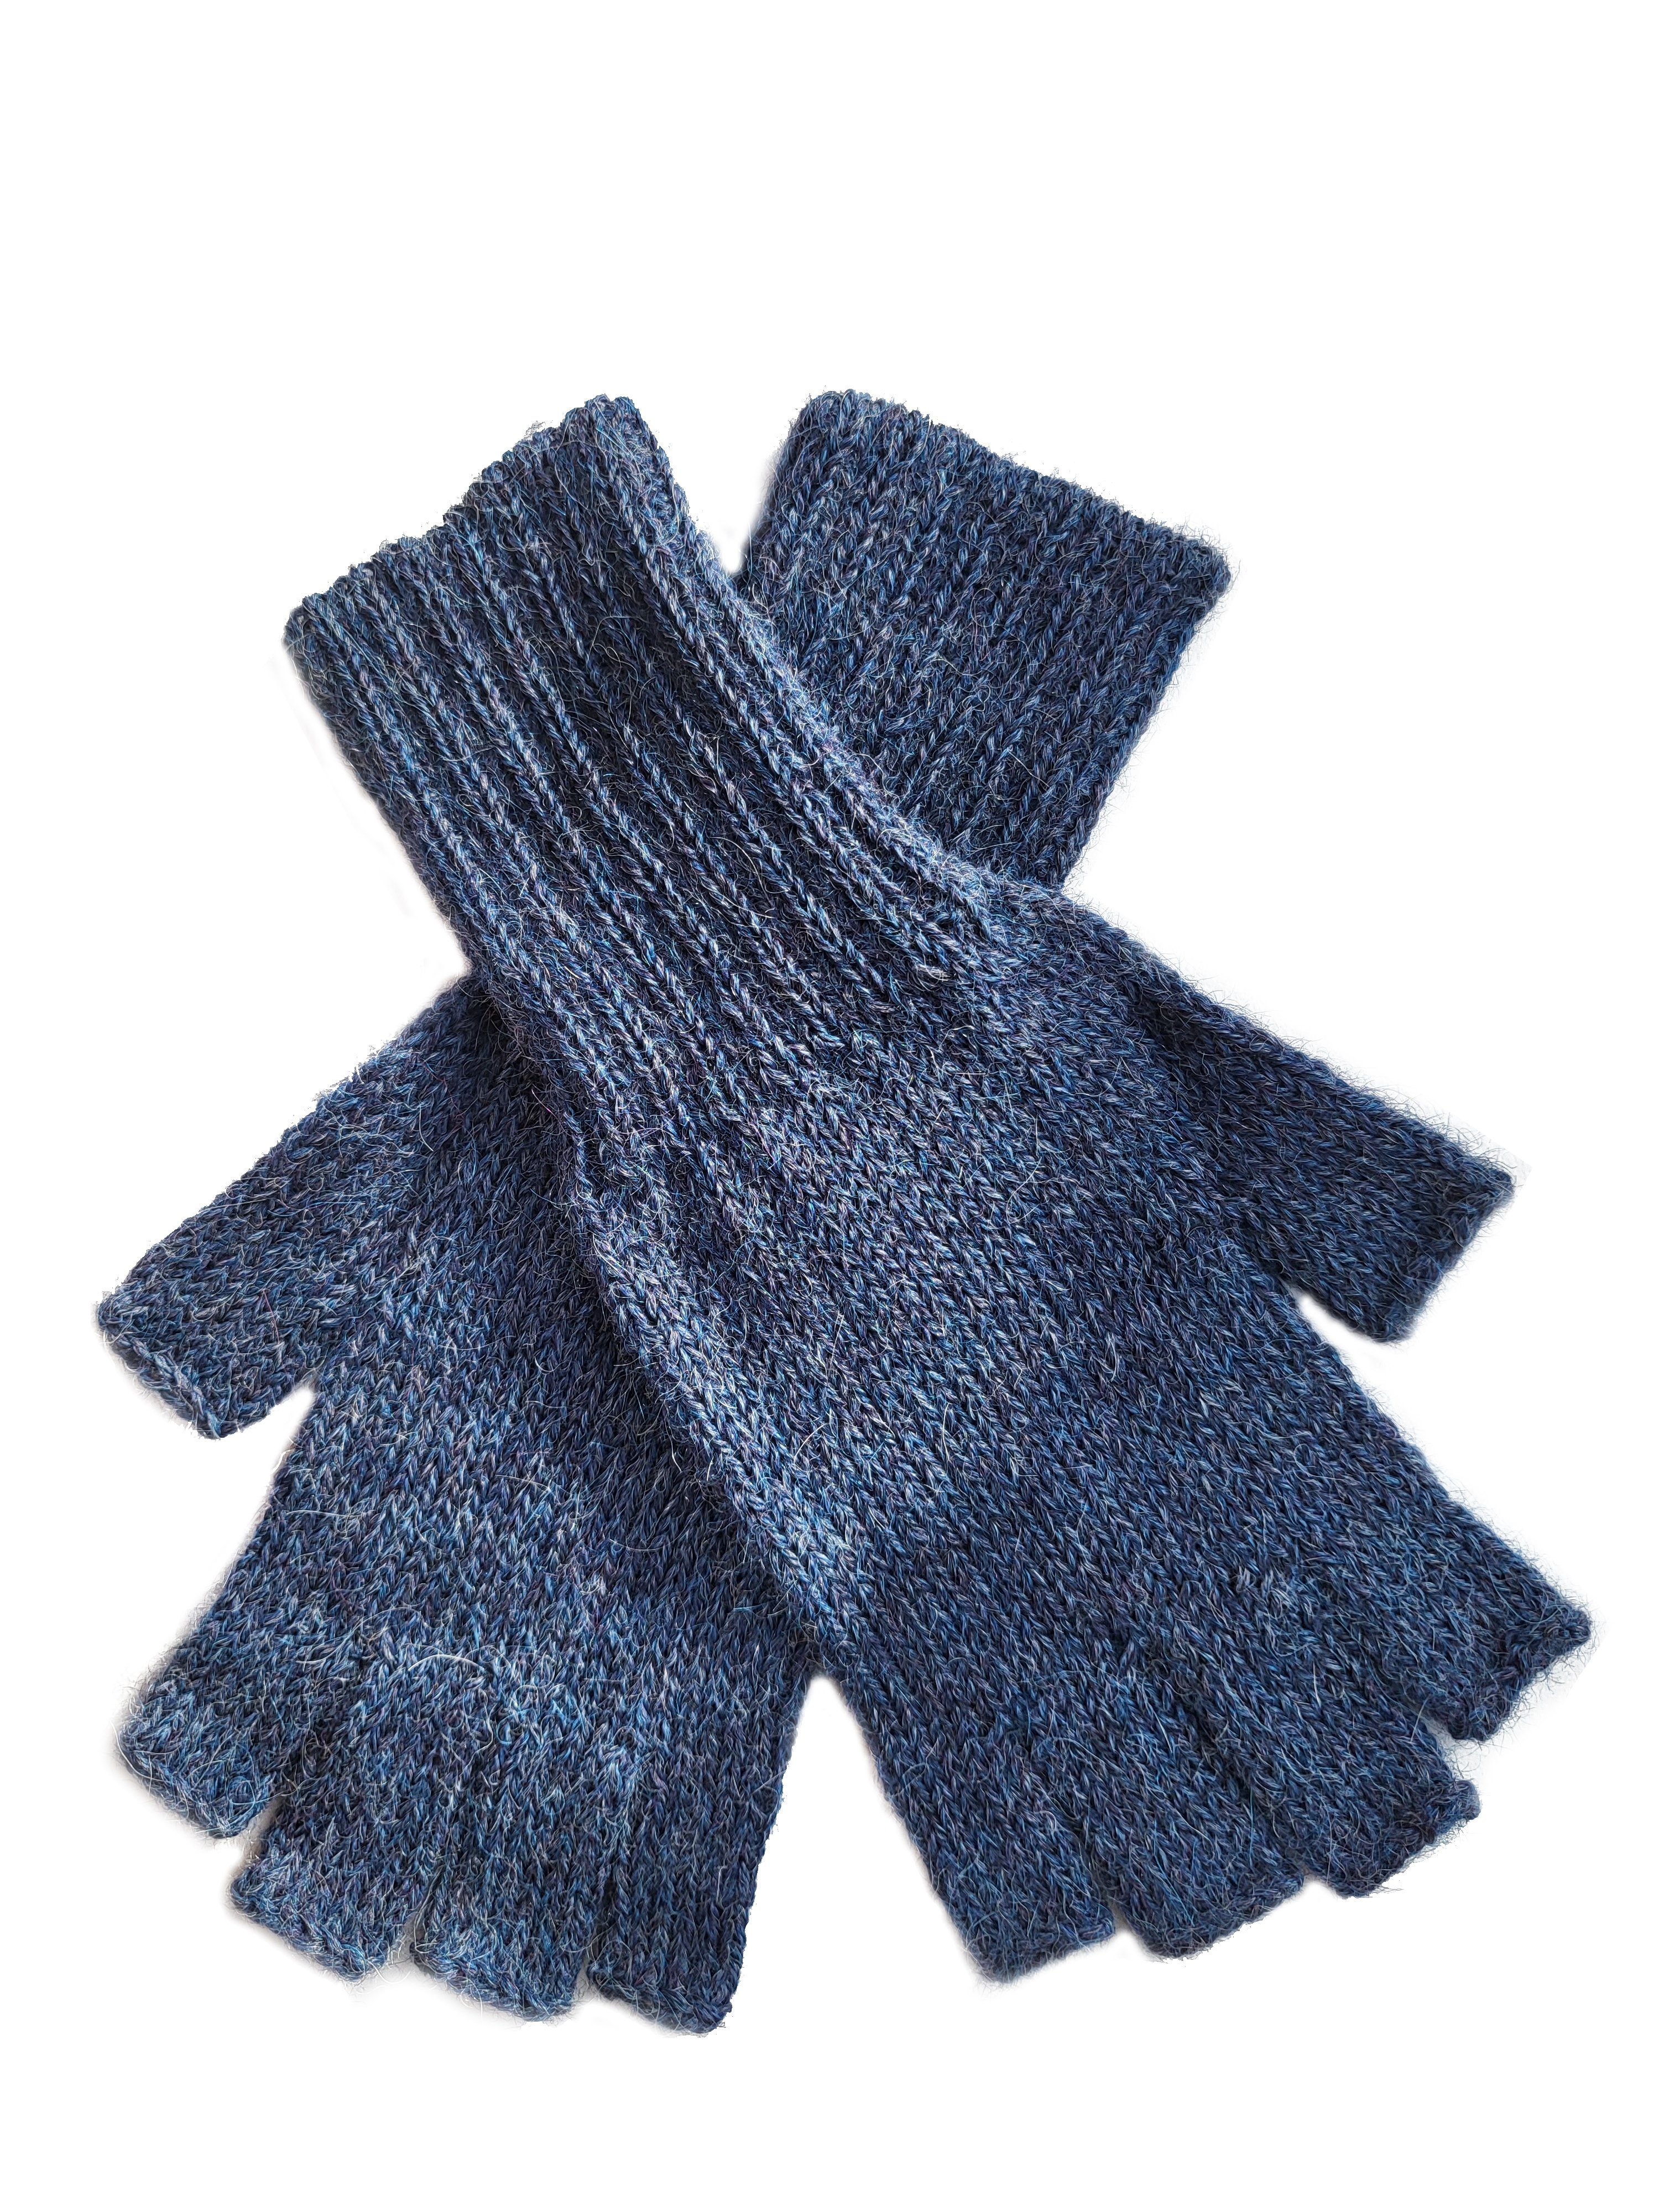 Strickhandschuhe Guantiless Alpaka Halb-Fingerhandschuhe Posh Gear blau dunkel